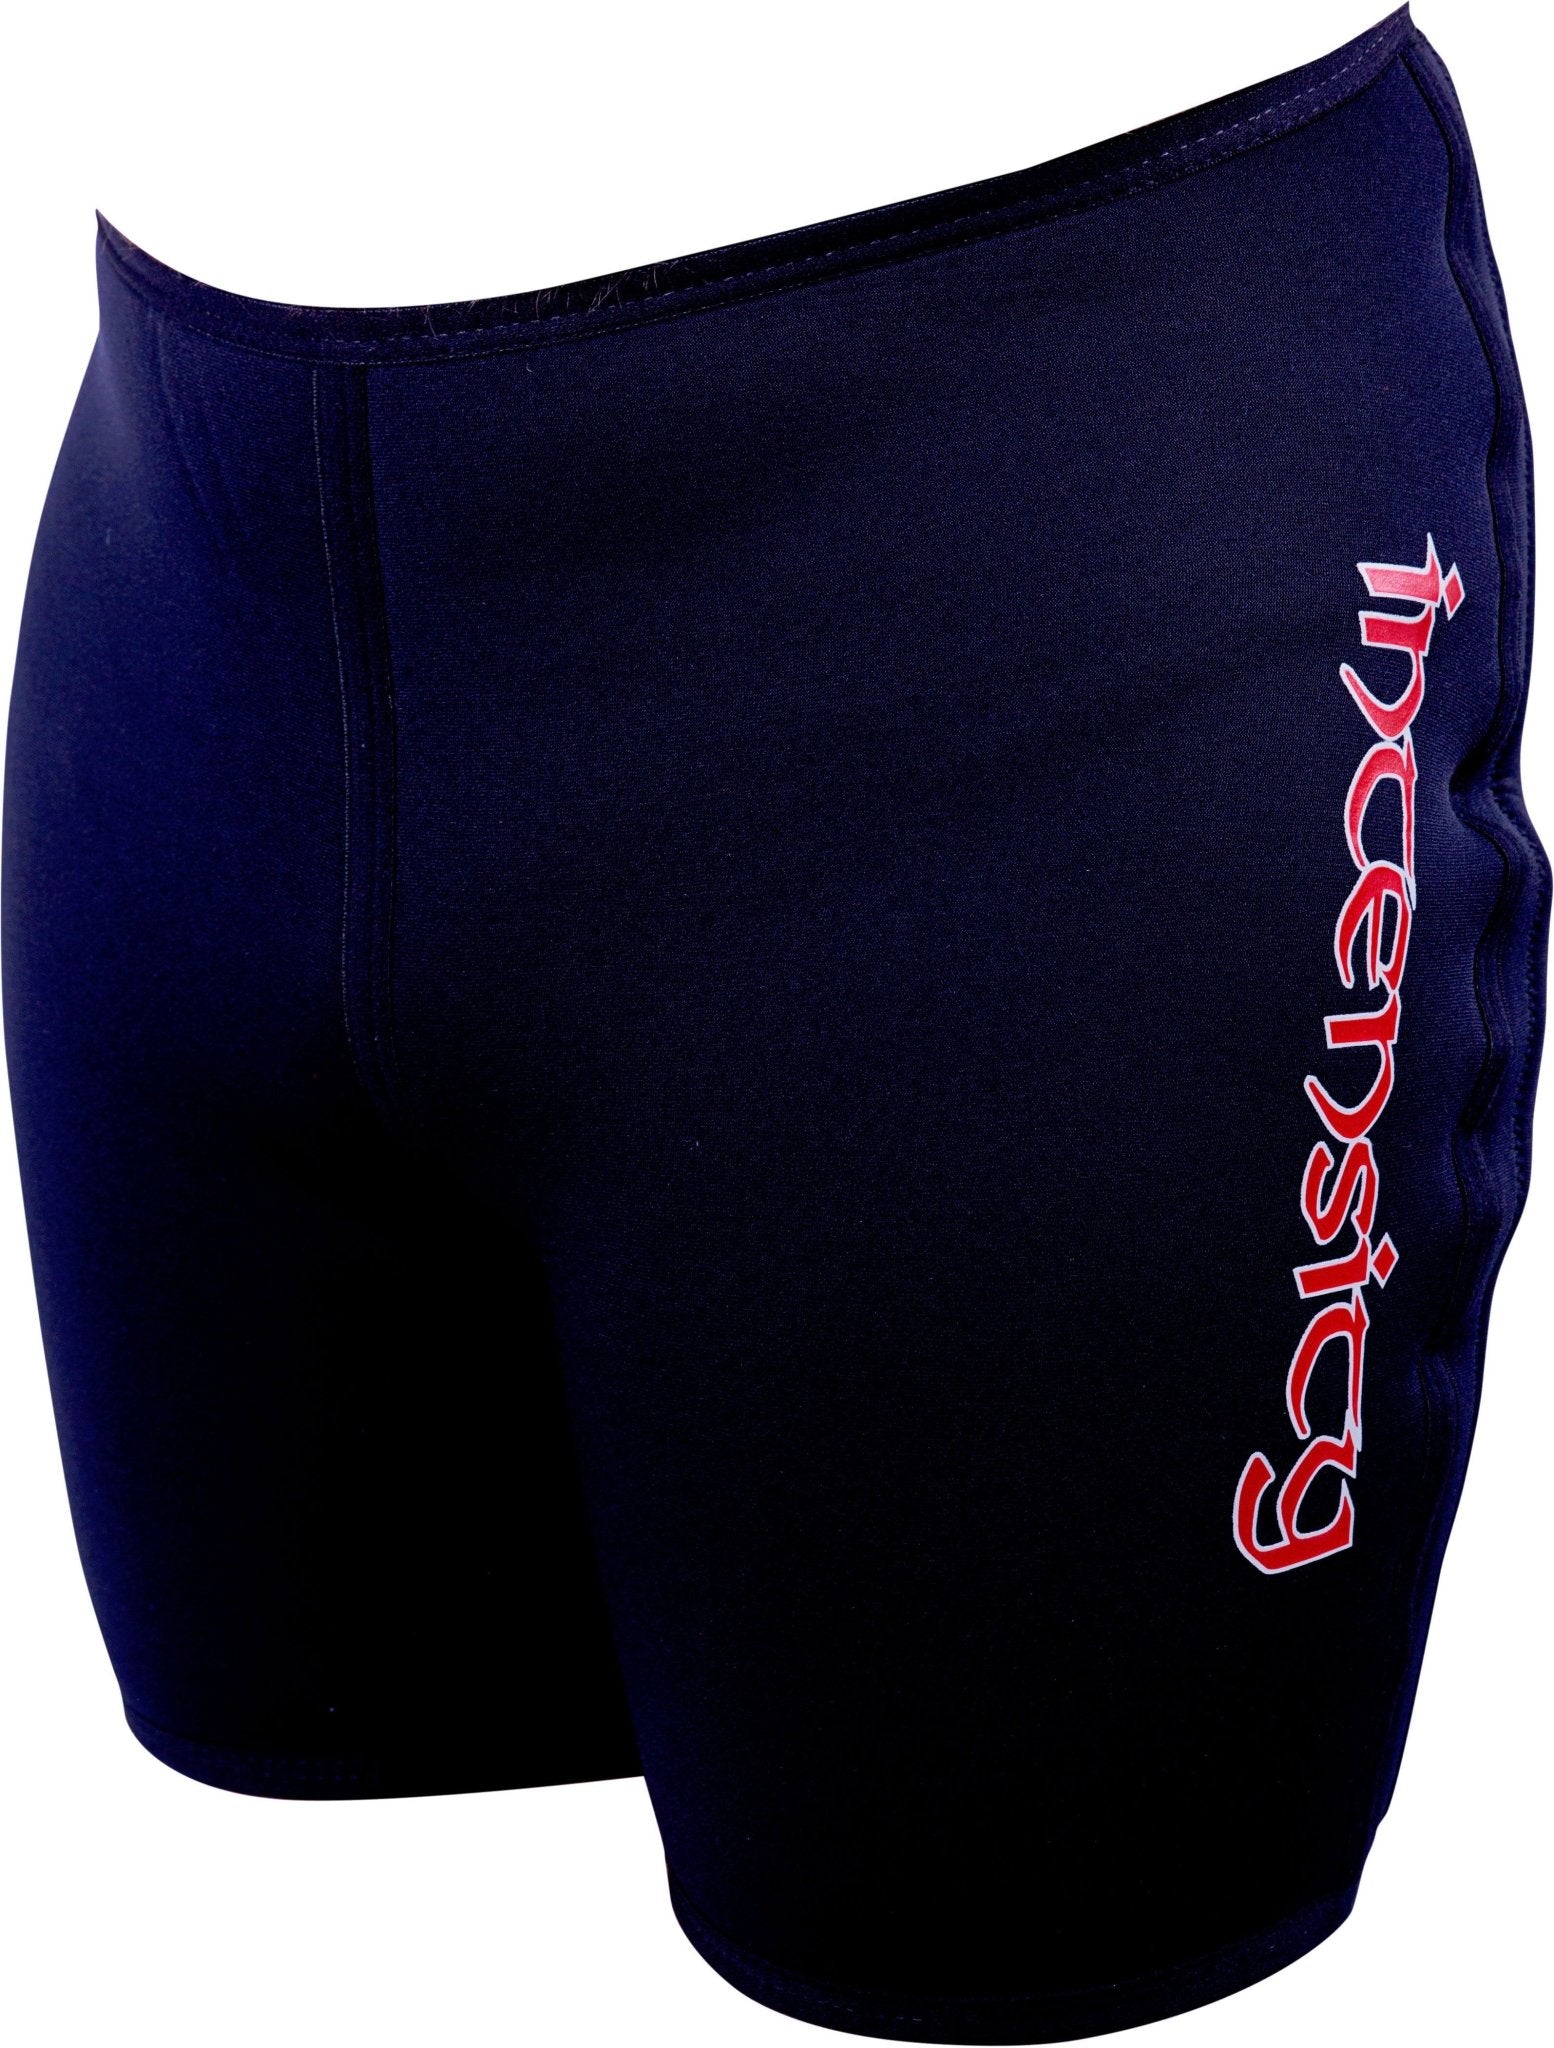 Pro Padded Shorts -Williams20IA8400-xs-Black